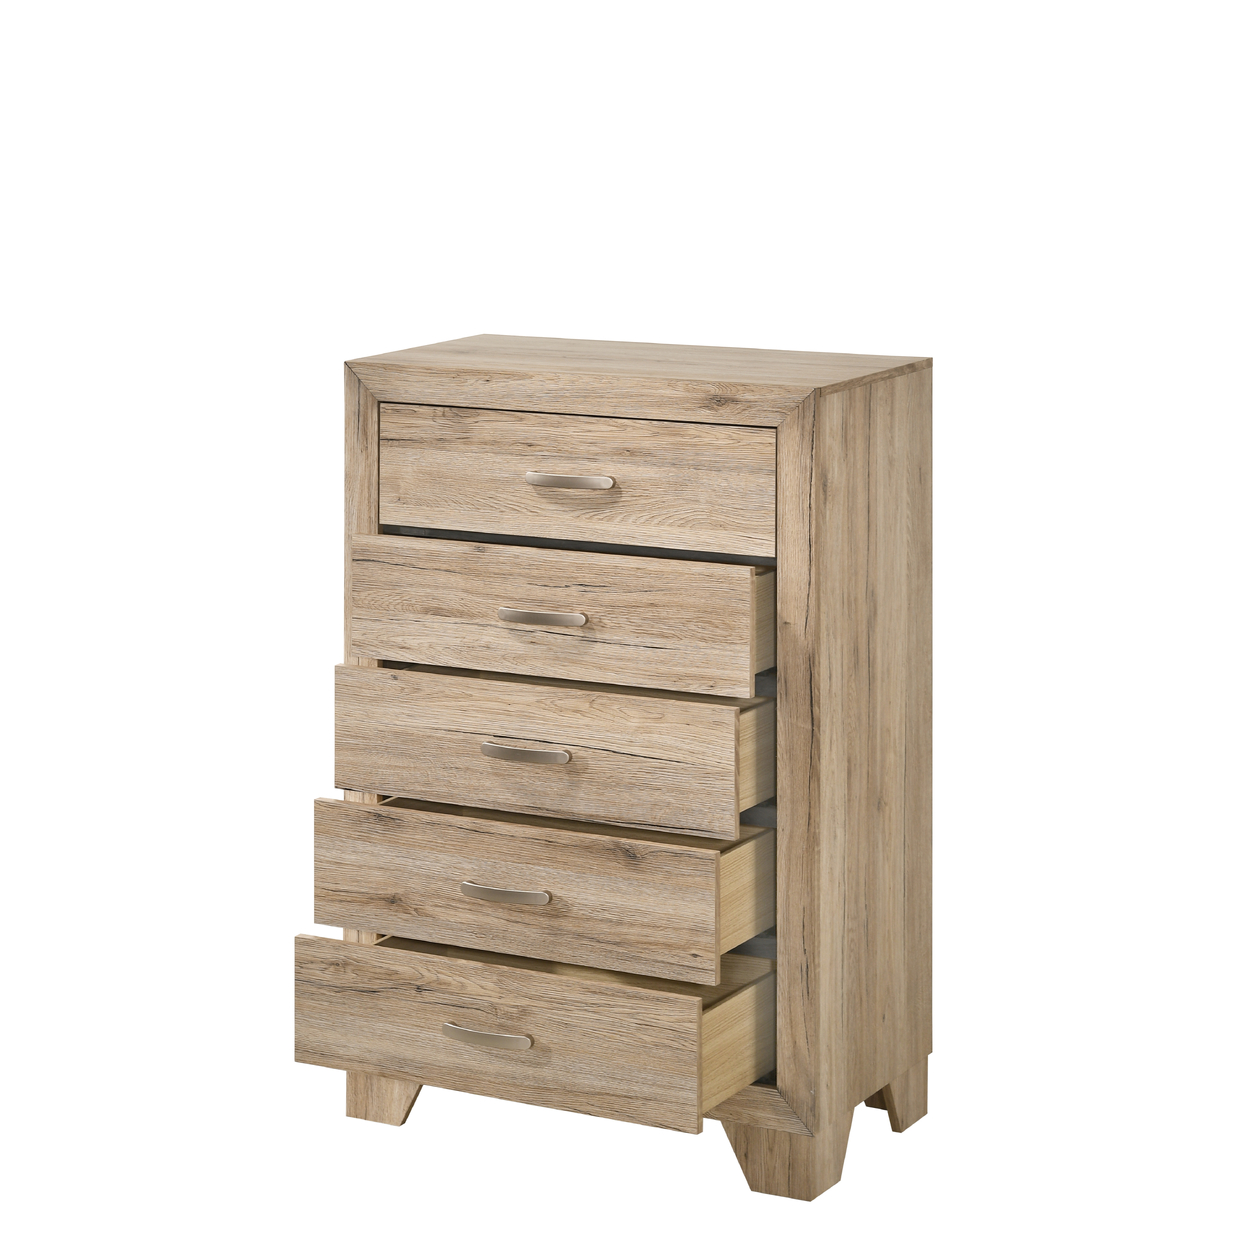 Wooden Chest With 5 Storage Drawers, Brown- Saltoro Sherpi